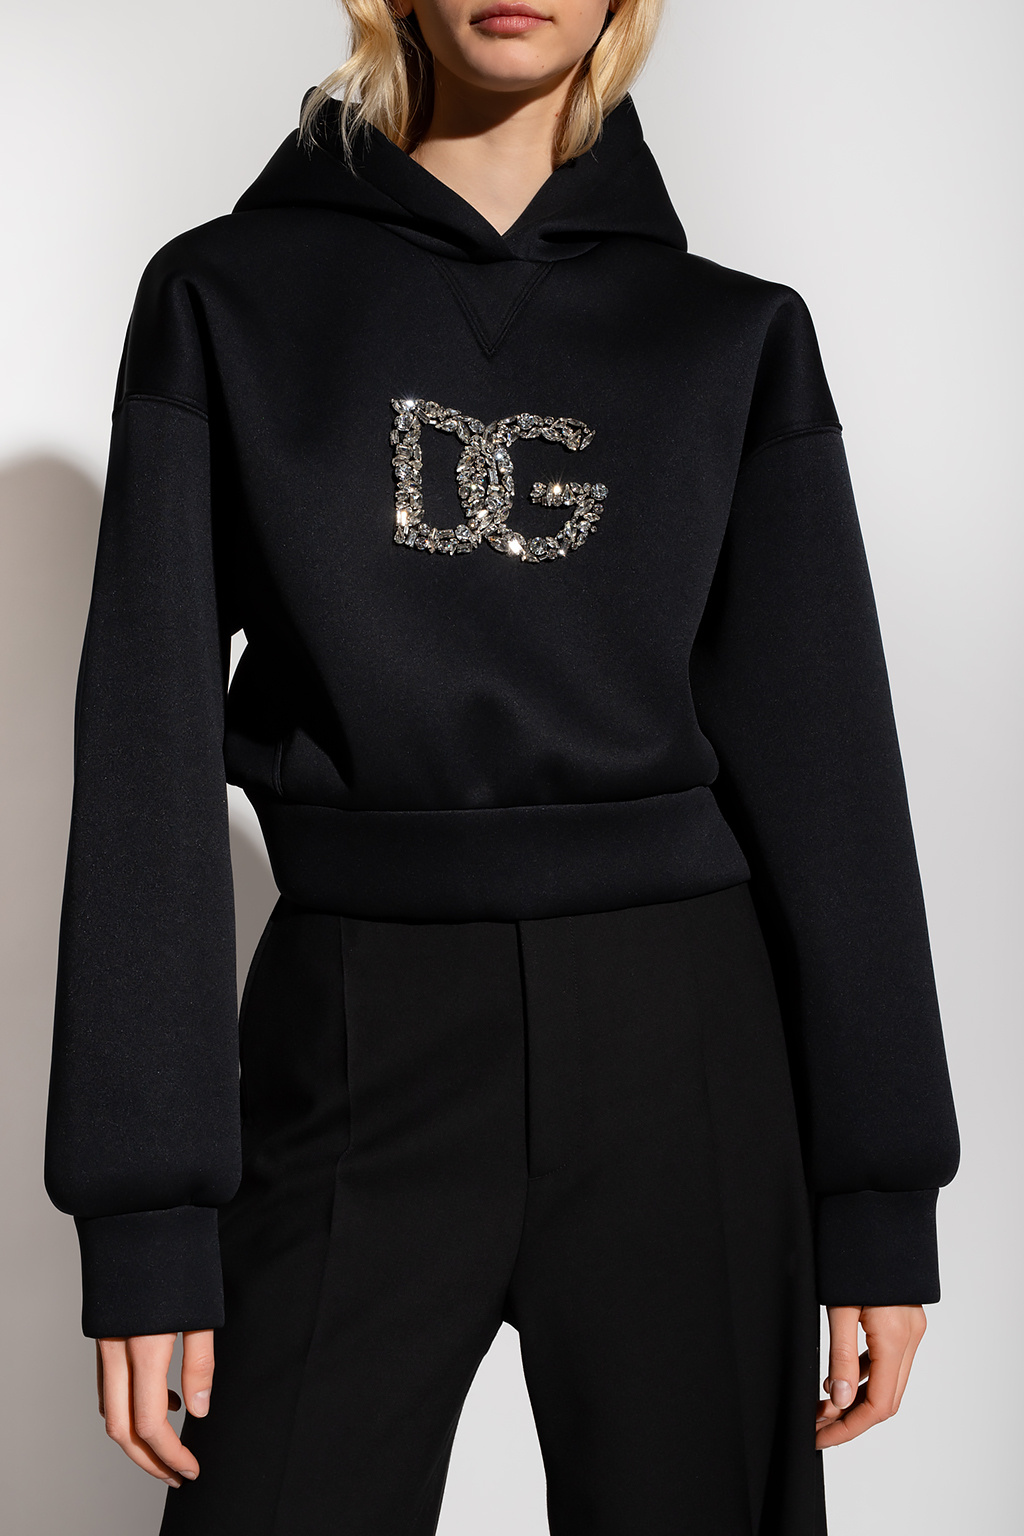 Наборы dolce & gabbana Dolce & Gabbana lace detail cropped top